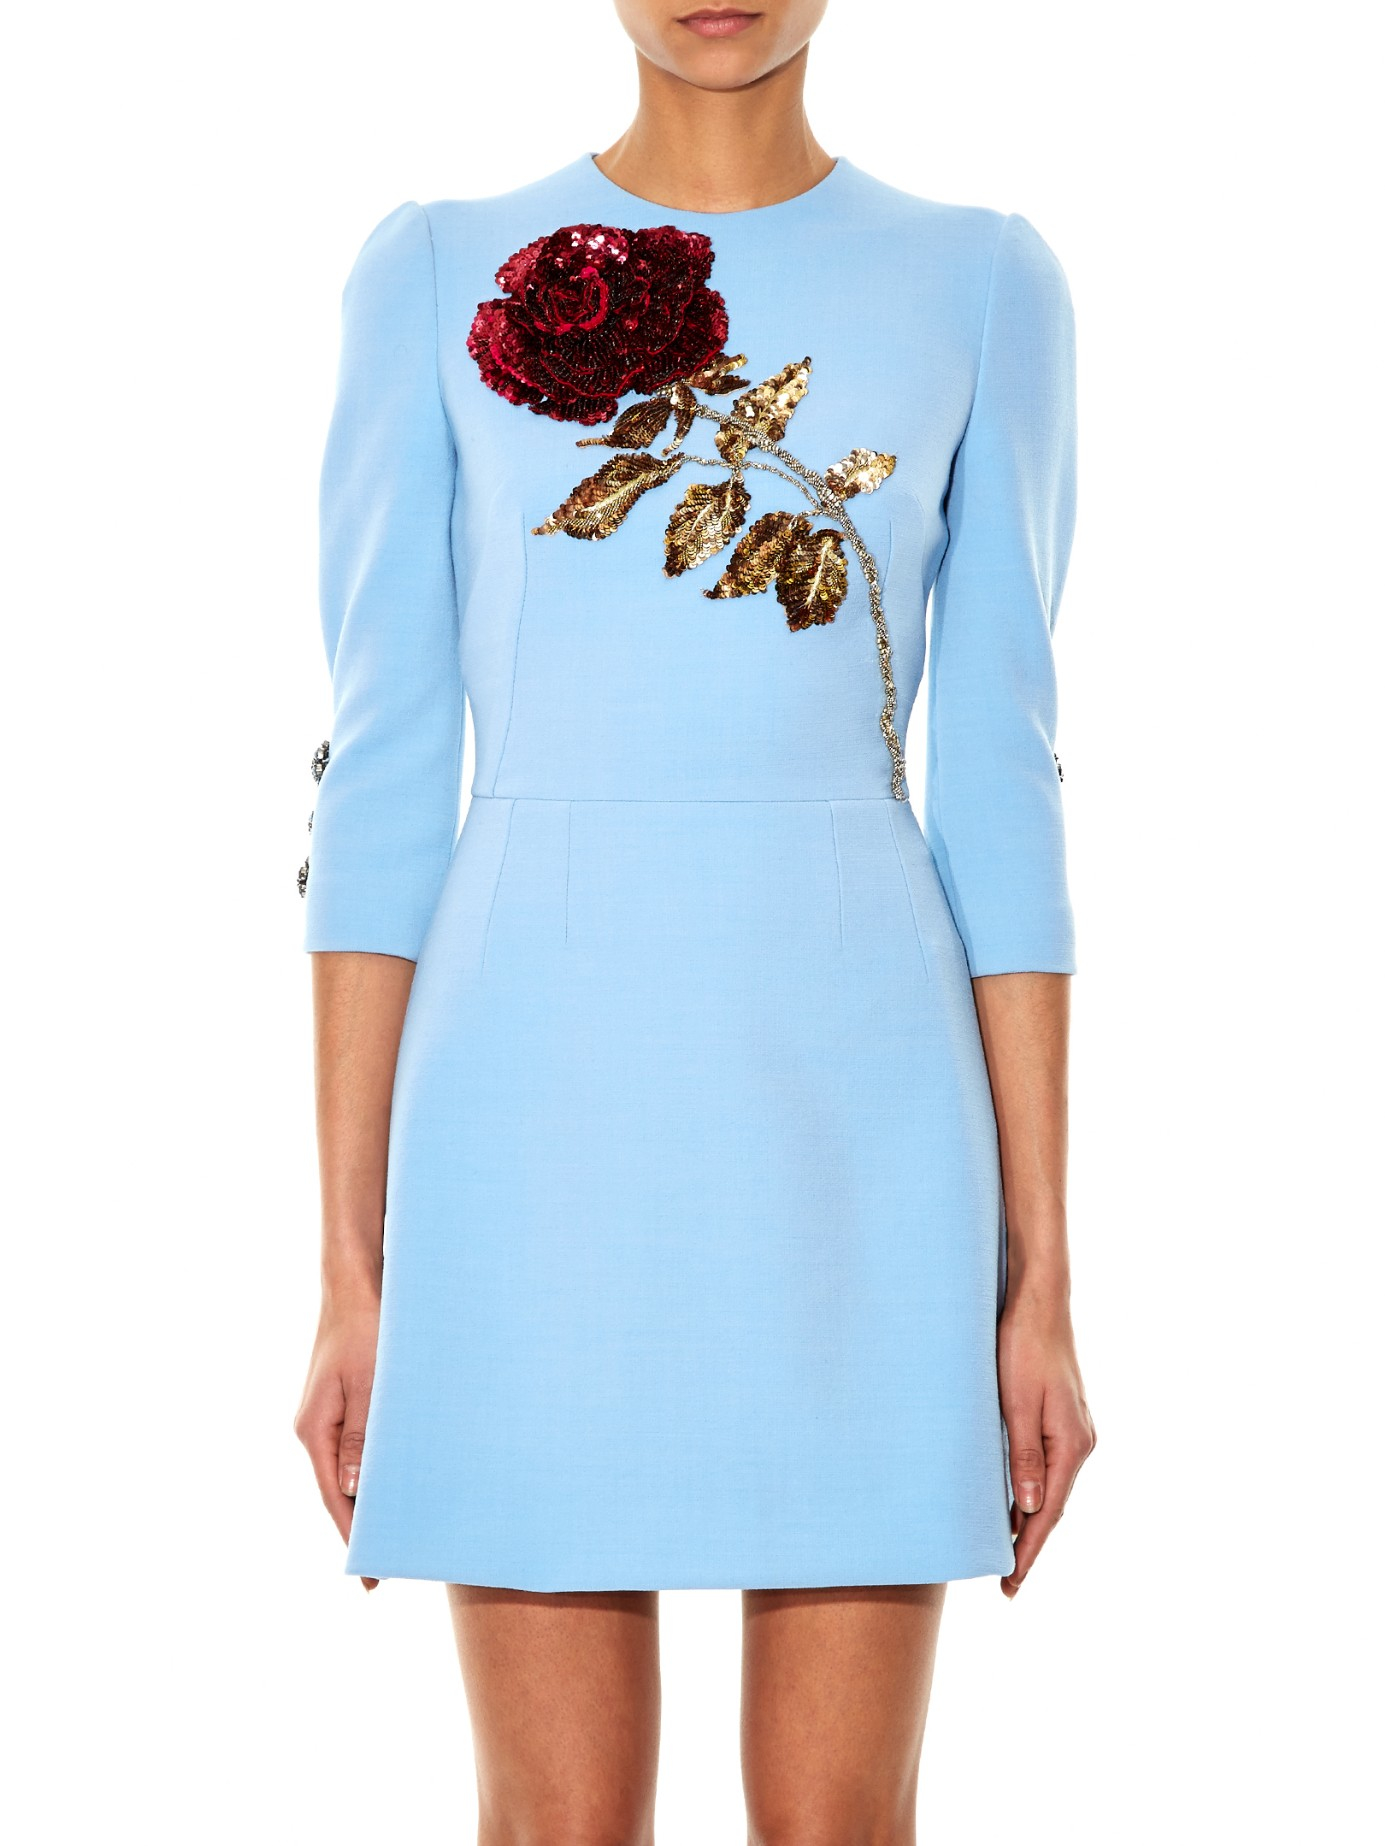 3 Jennifer Lopez's Shades of Blue Dolce & Gabbana Rose Embellished Dress